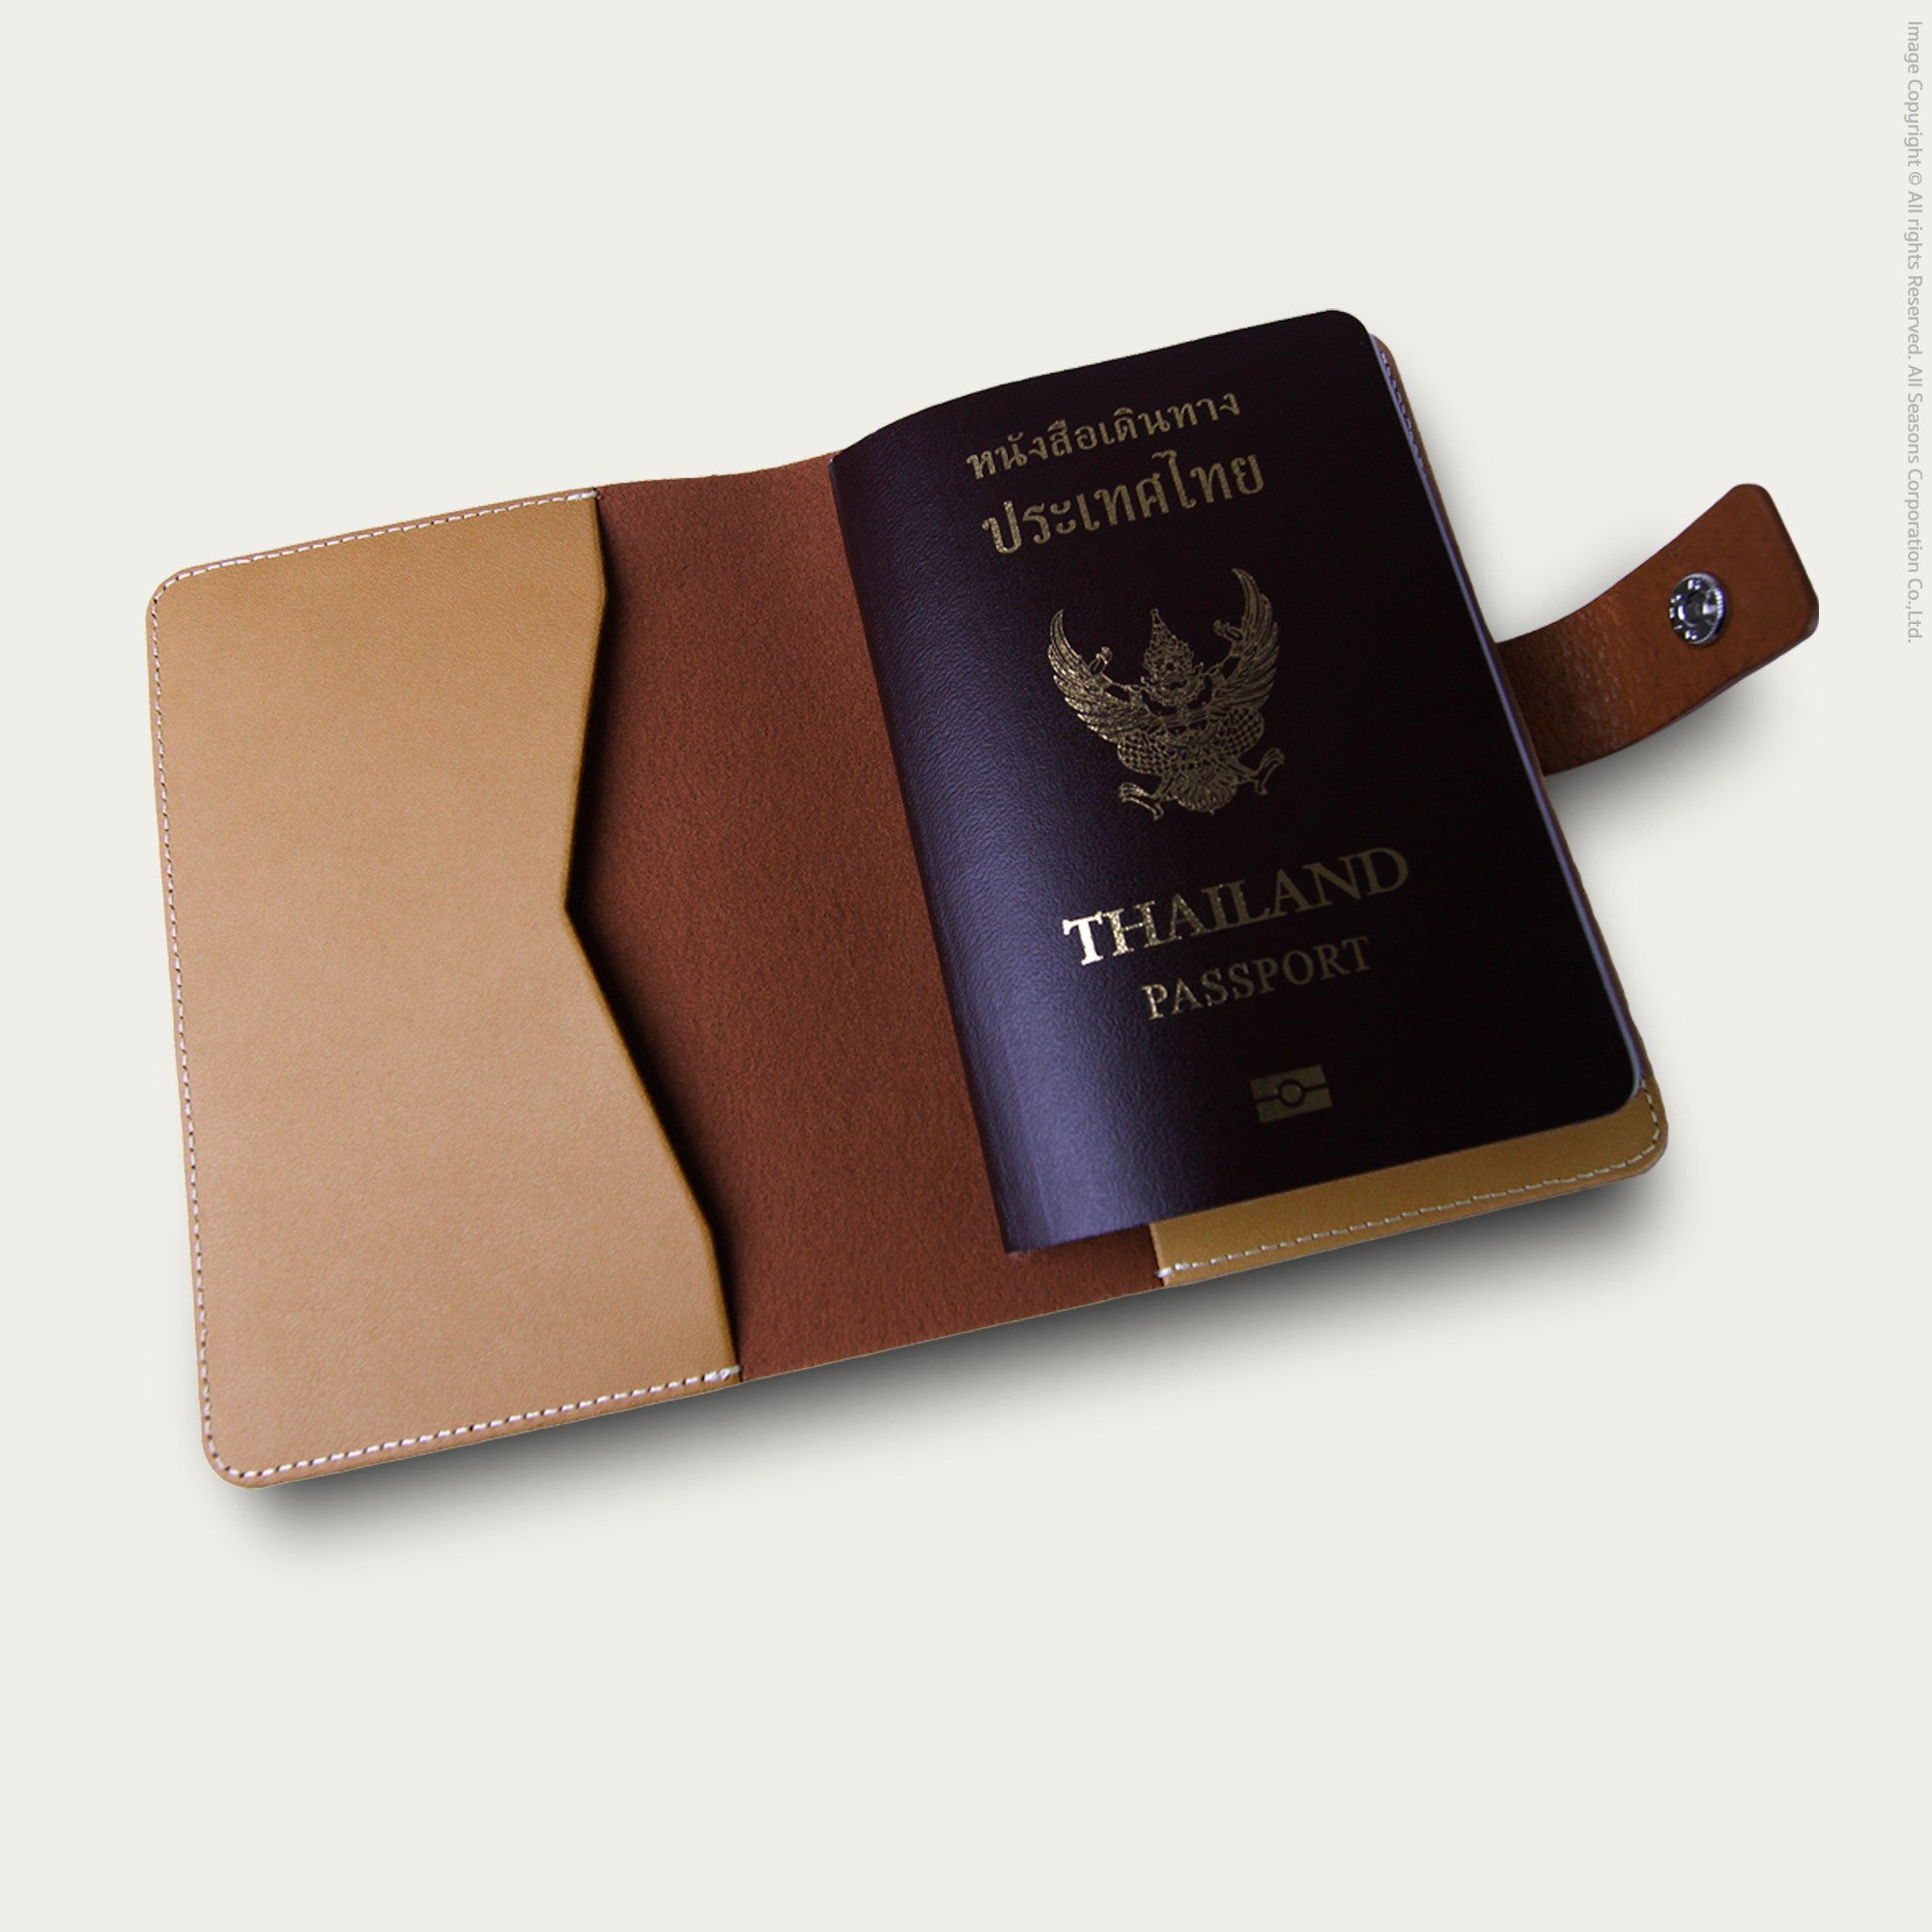 Personalized PU Passport Holder V.1